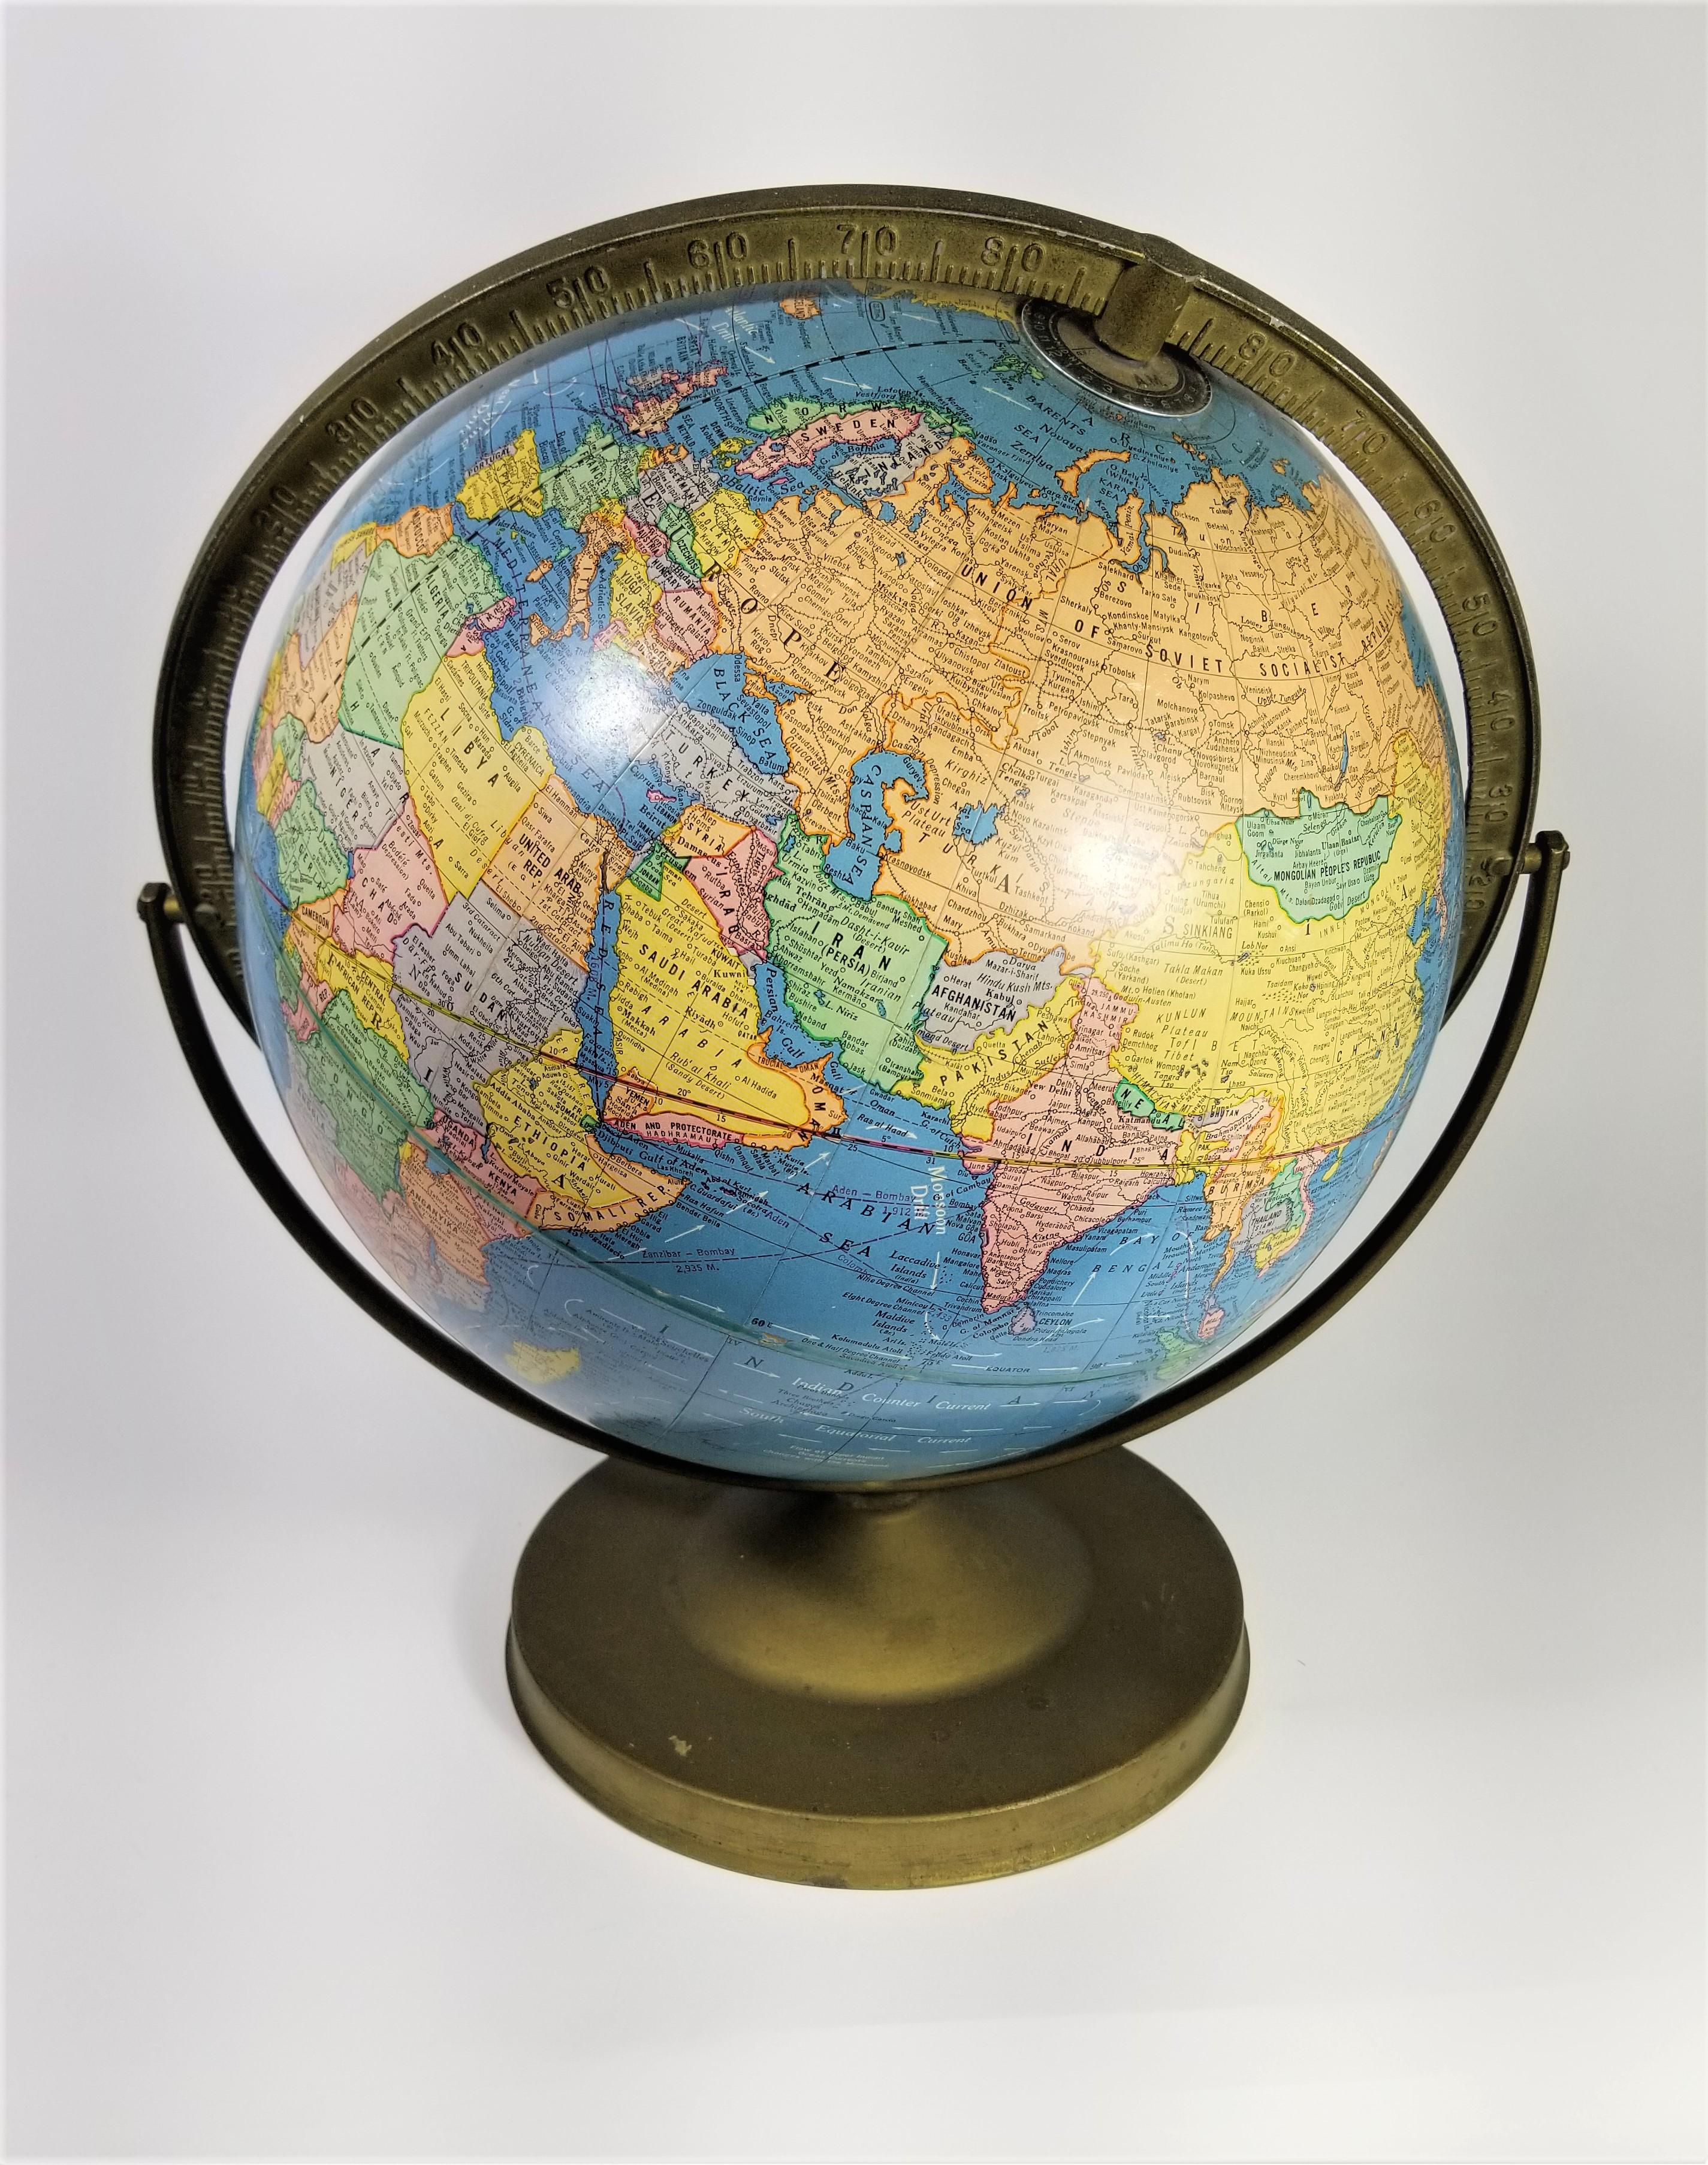 cram's imperial world globe age